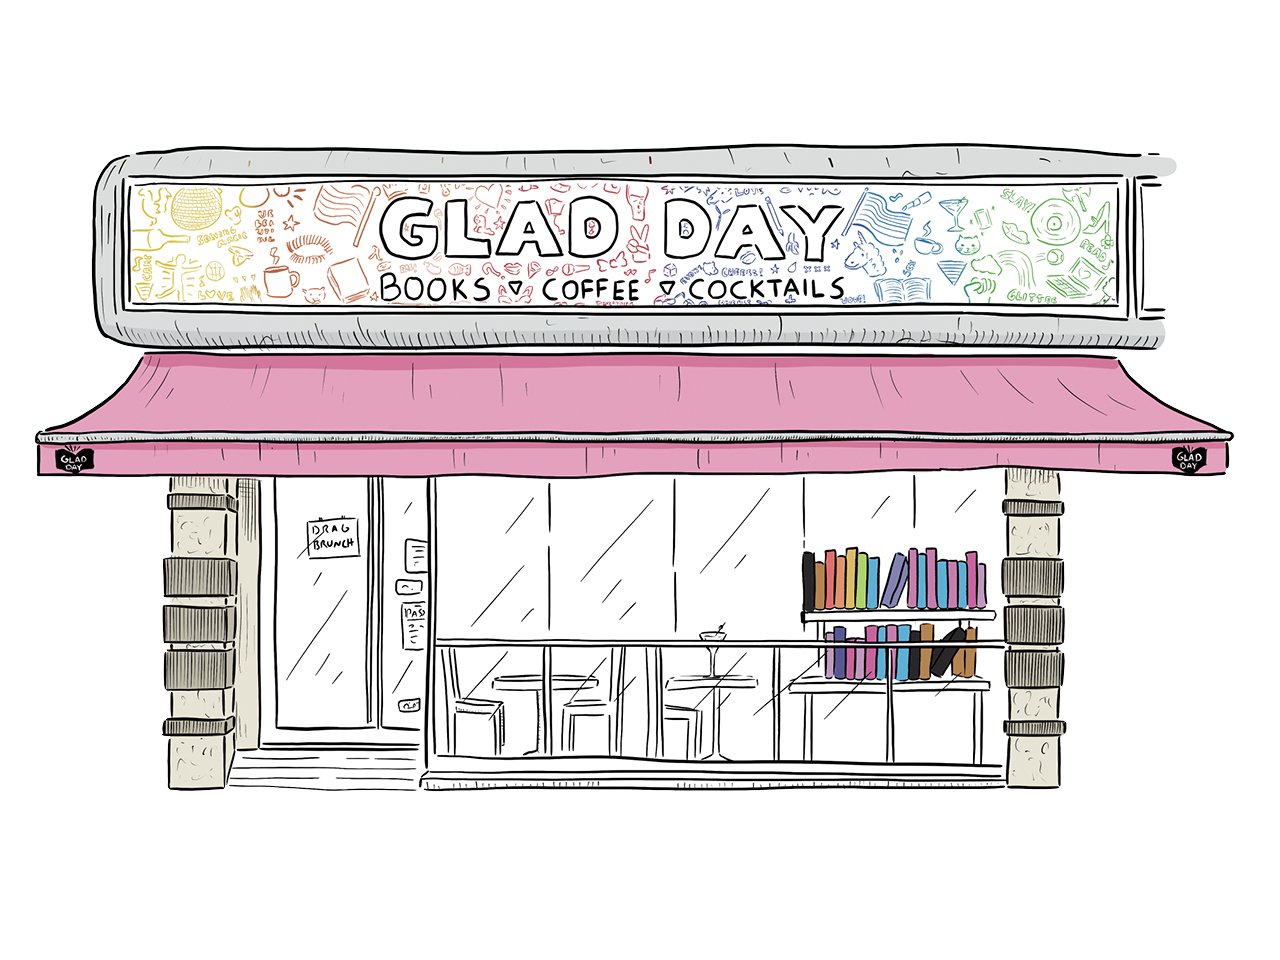  Glad Day Bookshop